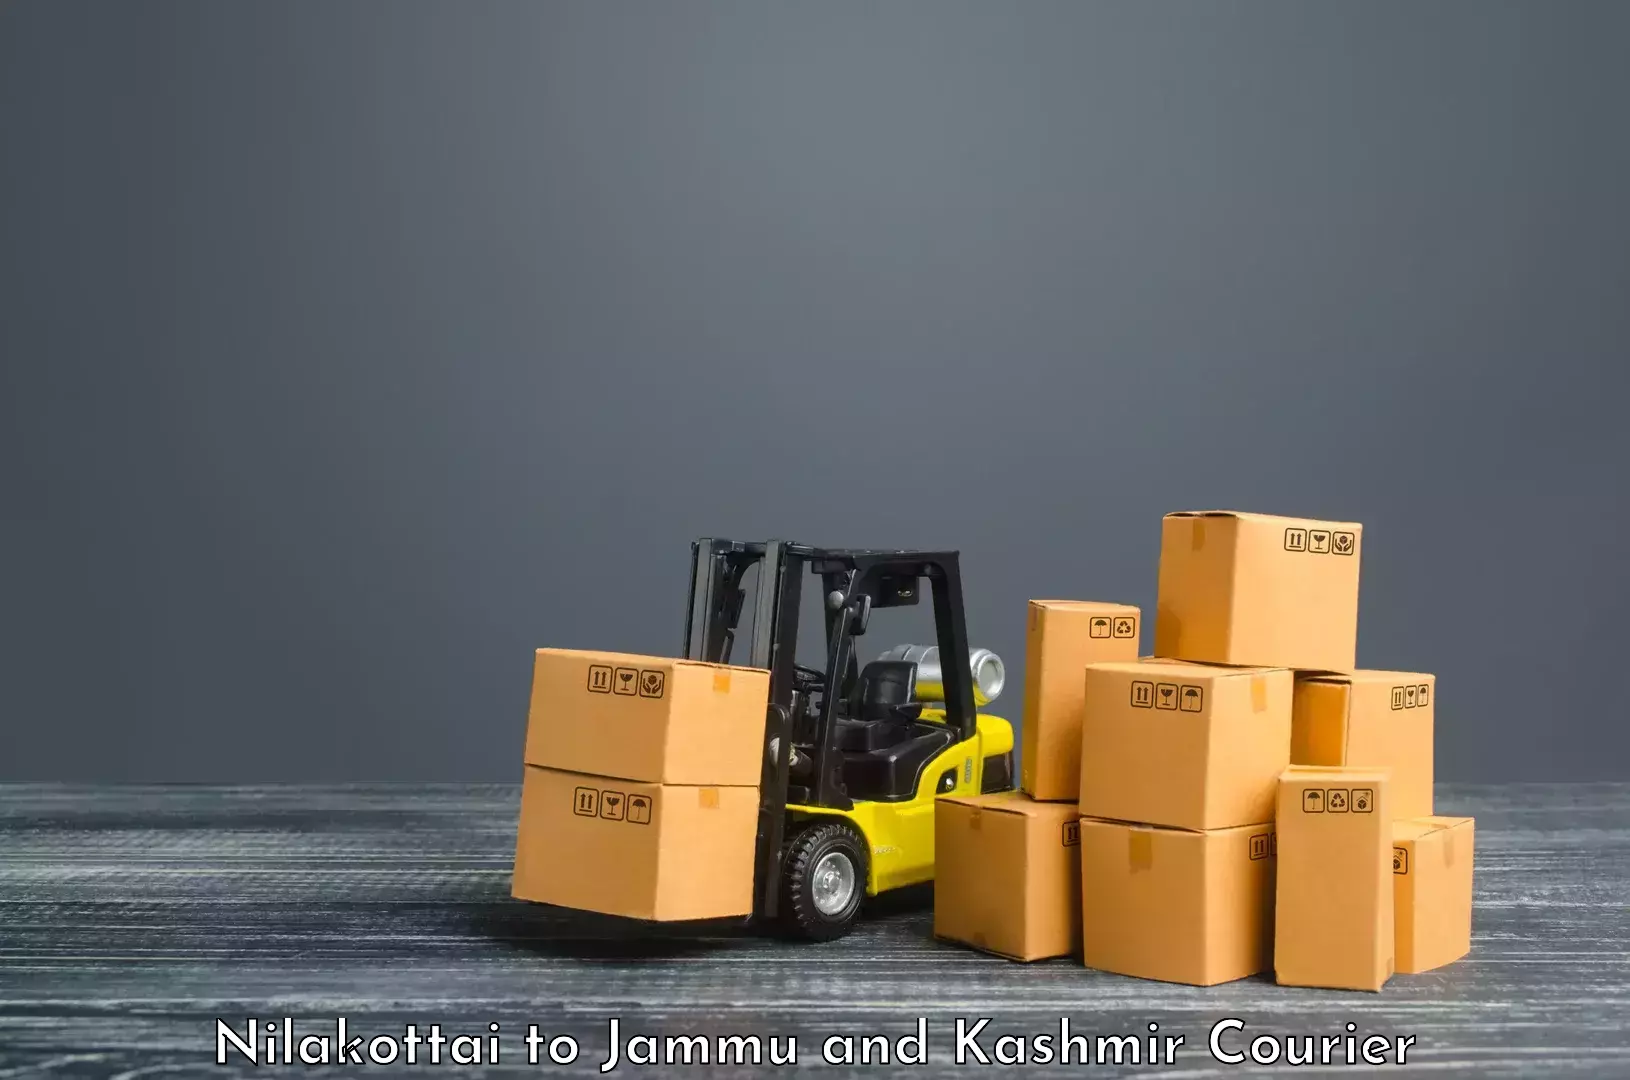 Fast-track shipping solutions Nilakottai to Srinagar Kashmir